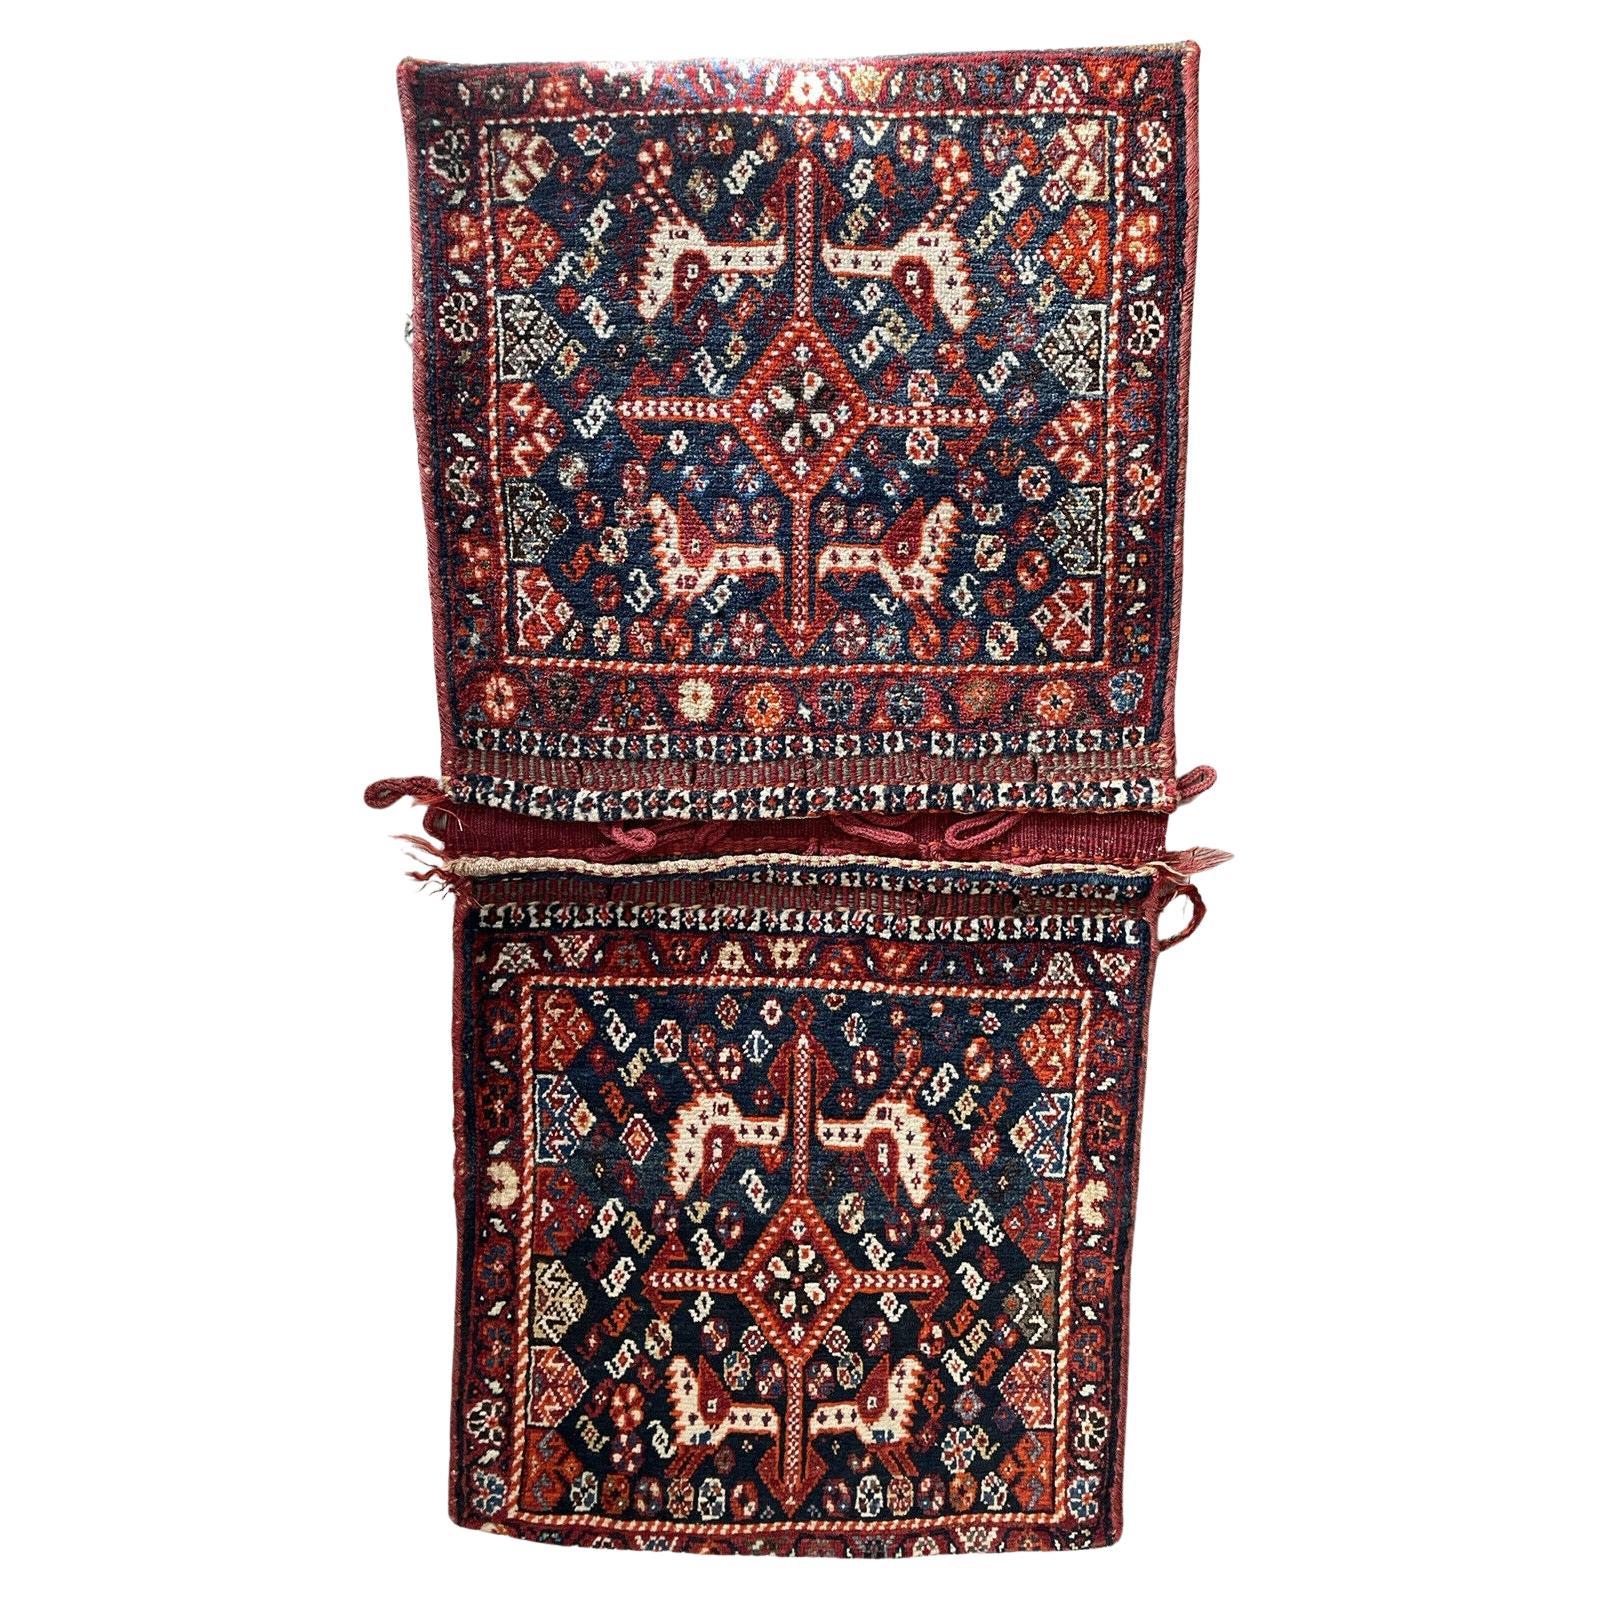 Handmade Antique Persian Collectible Gashkai Bag 1.7' x 3.5', 1900s - 1N20 For Sale